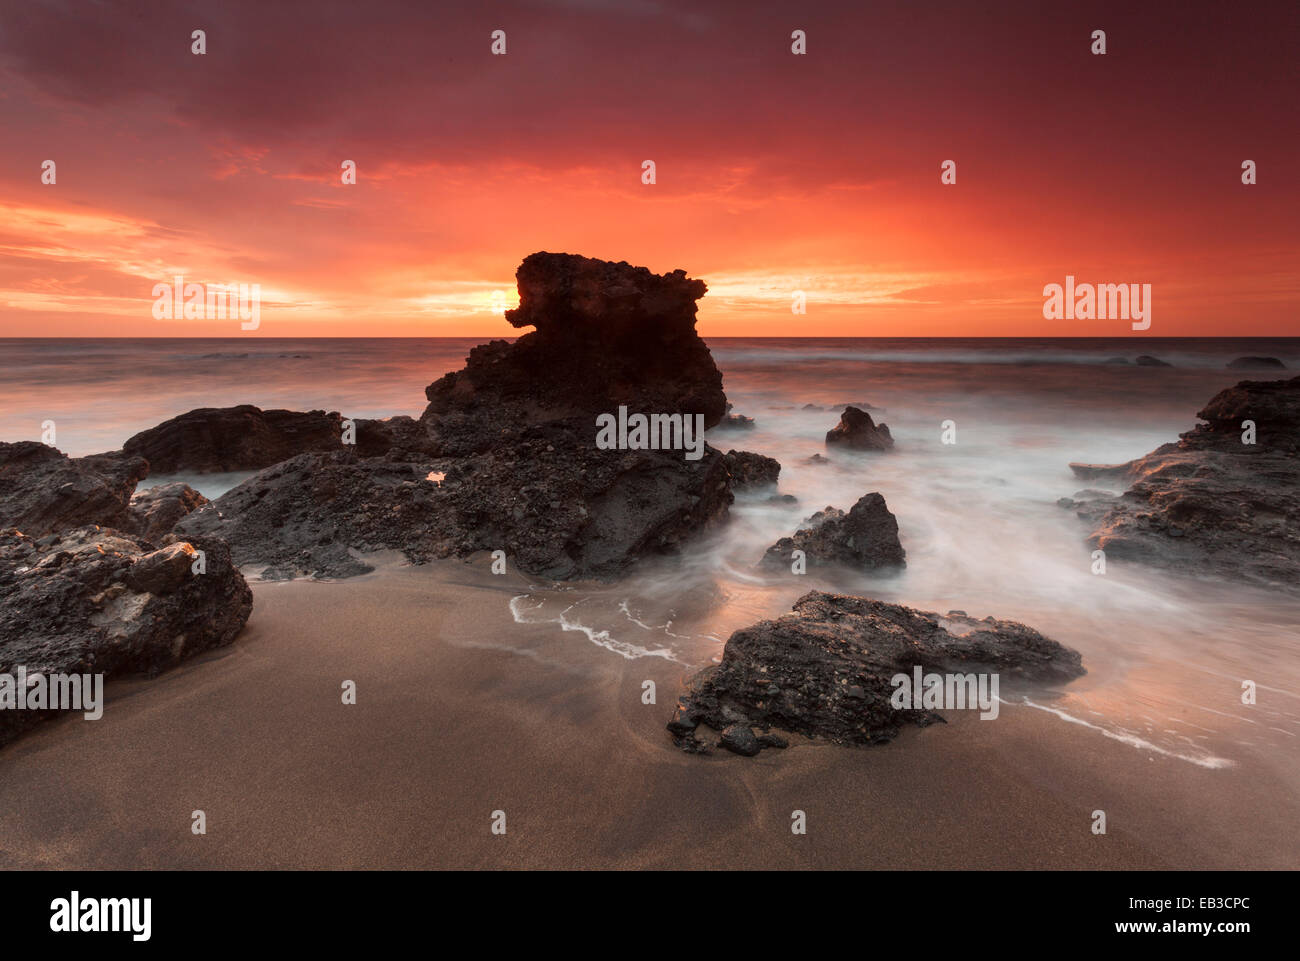 Spain, Canary Islands, Fuerteventura, Beach at sunset Stock Photo